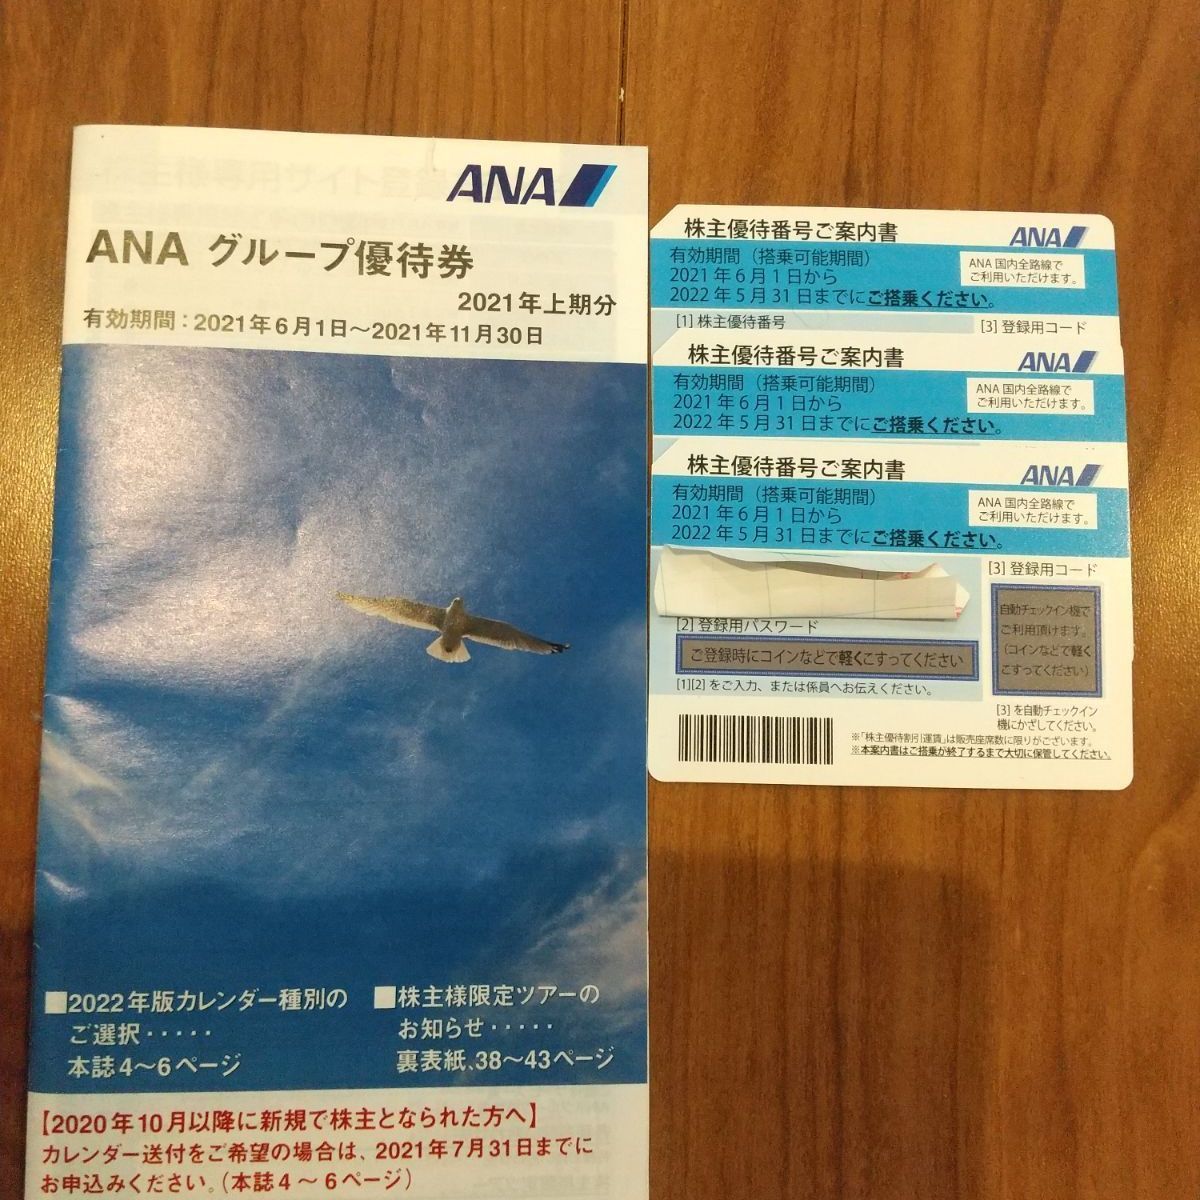 ANA株主優待券3枚 - ウシショップ - メルカリ